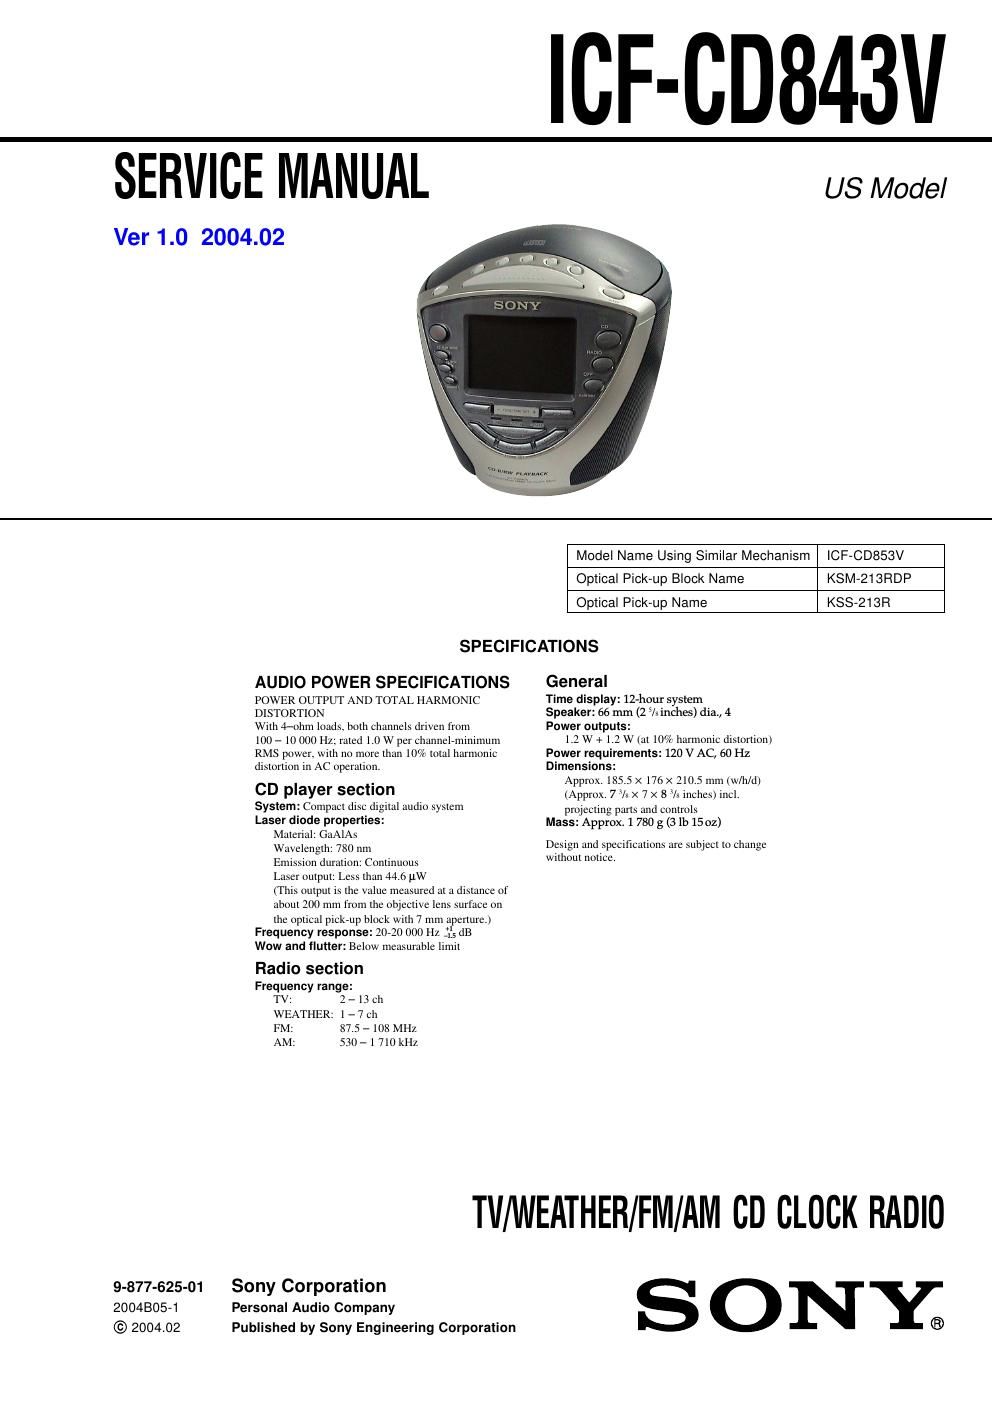 sony icf cd 843 v service manual